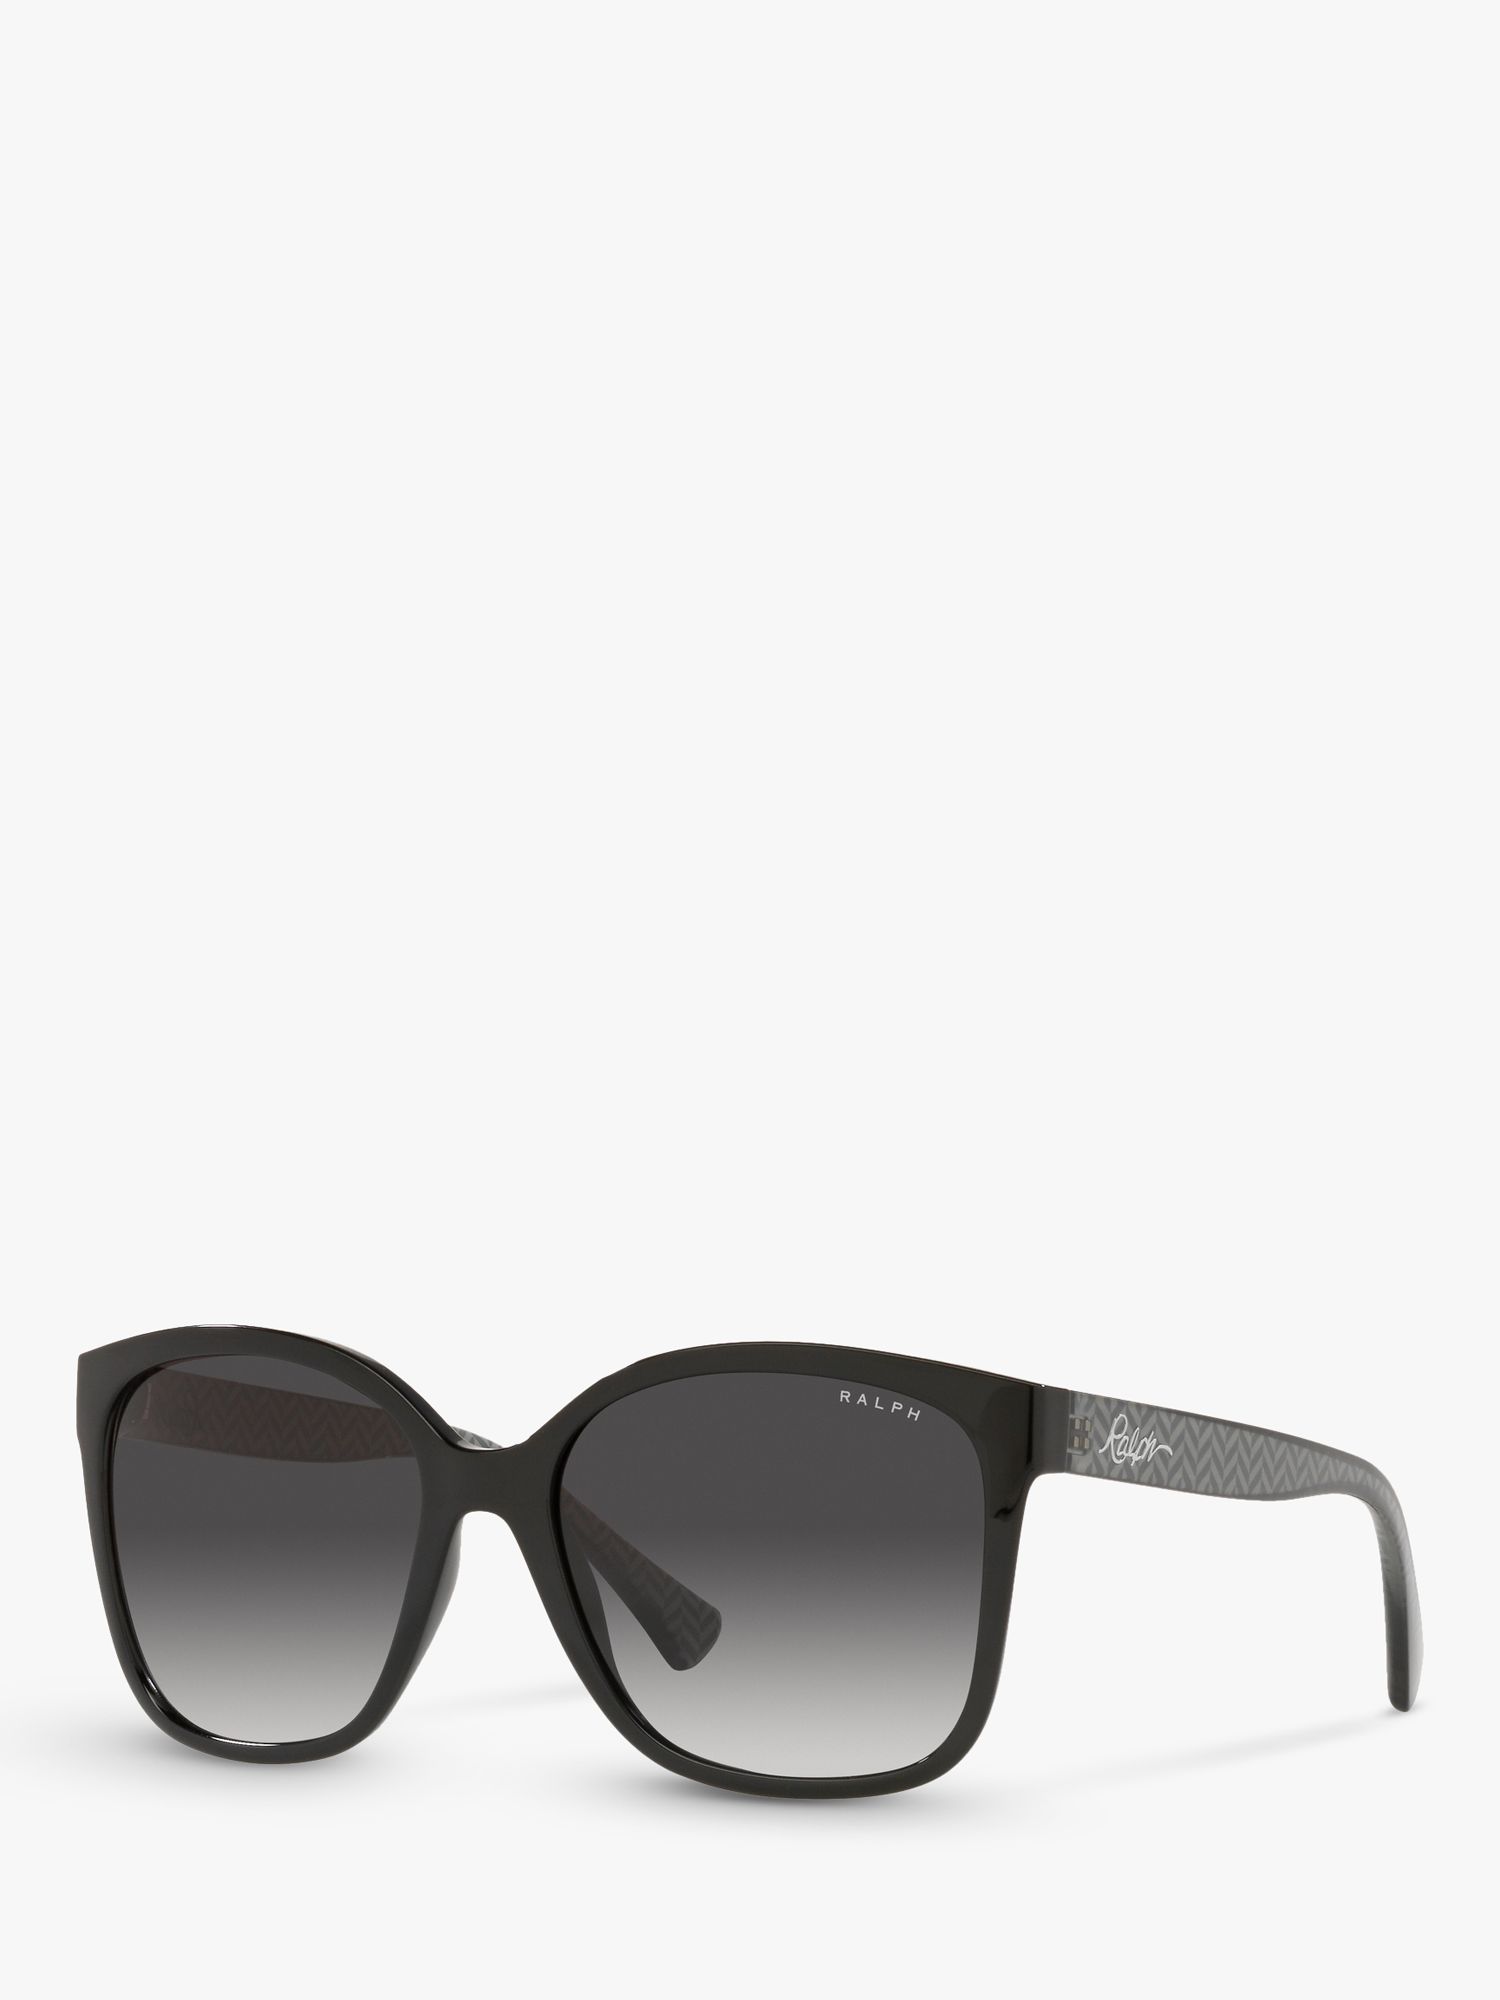 Ralph RA5268 Women's Square Sunglasses, Black/Grey Gradient at John Lewis &  Partners